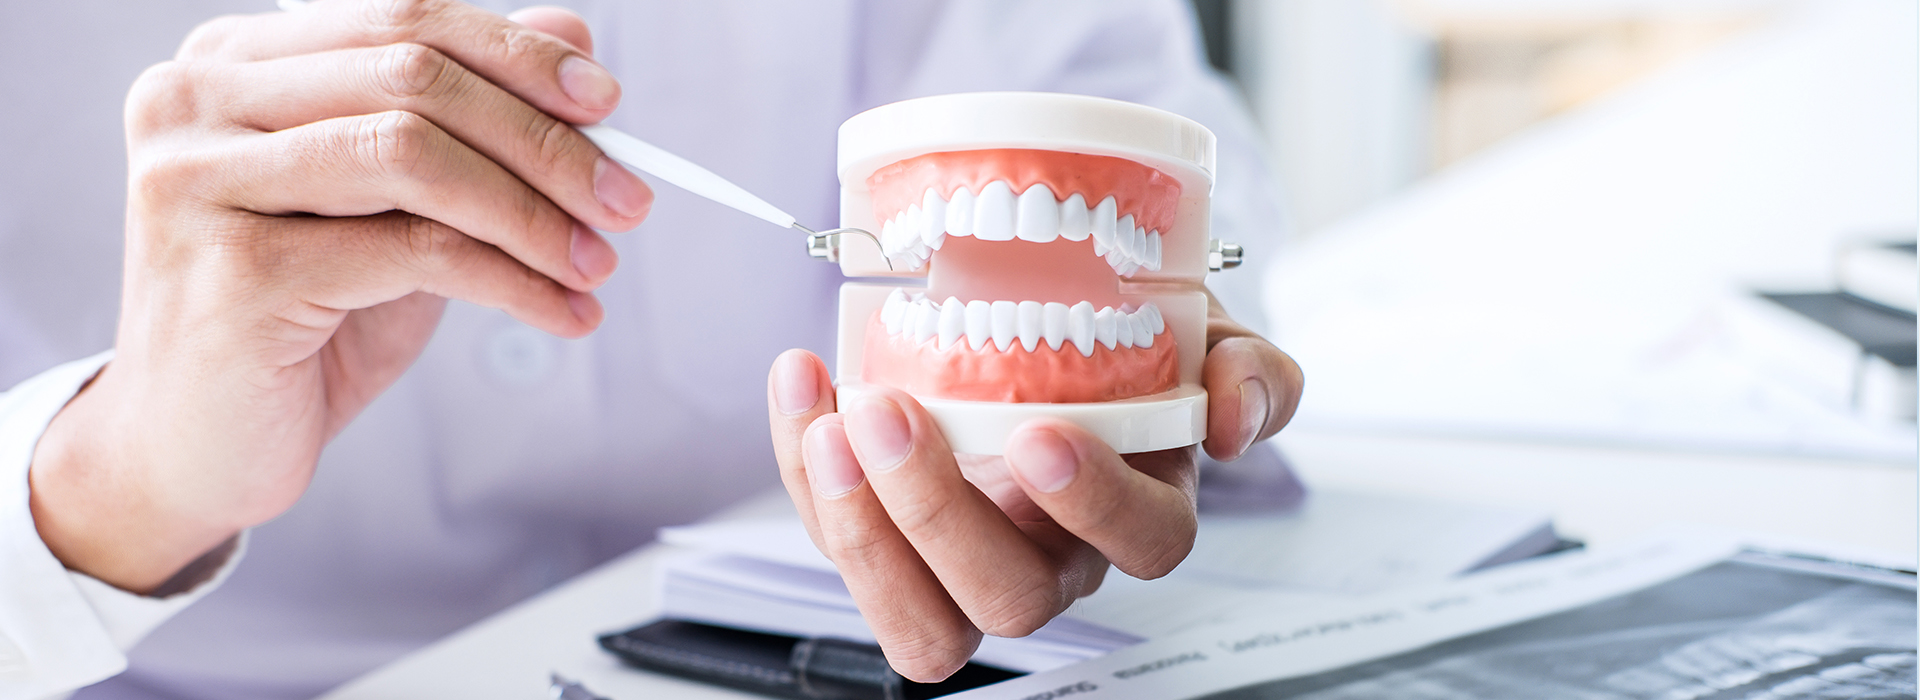 Springfield Gentle Dental | Oral Cancer Screening, Sedation Dentistry and Teeth Whitening